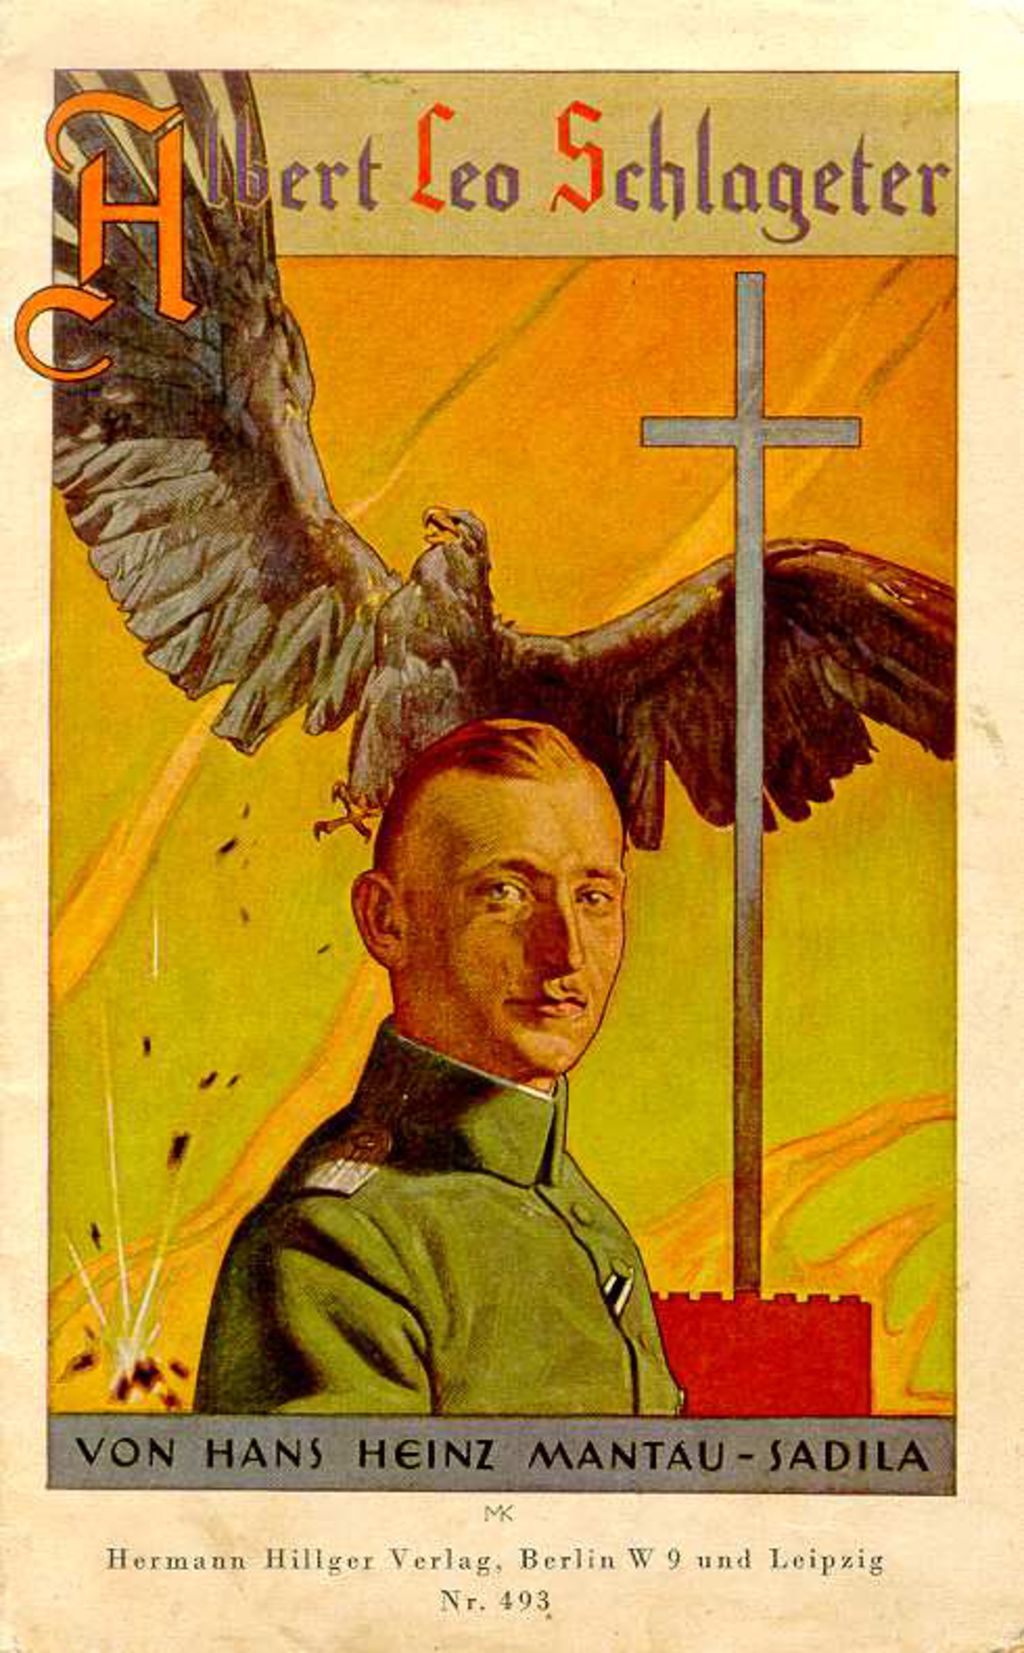 Exponat: Broschüre: "Albert Leo Schlageter", 1934